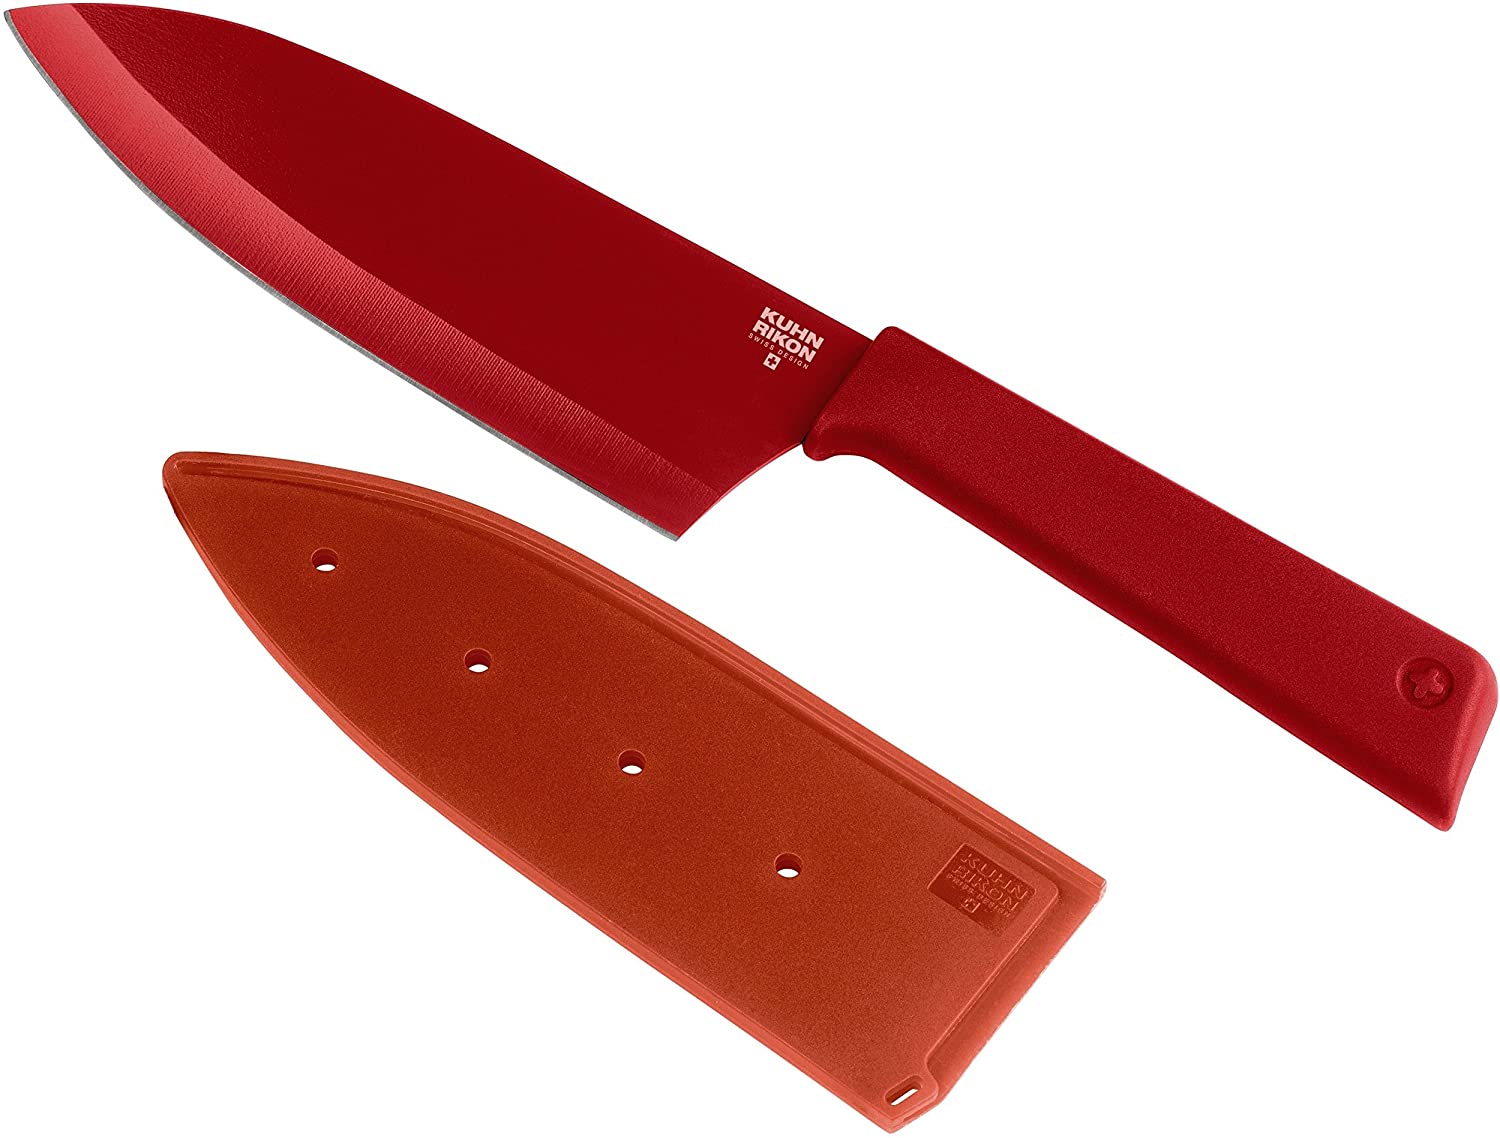 Kuhn Rikon Colori+ Non-Stick Large Santoku Knife with Safety Sheath, 27.5 cm, Red